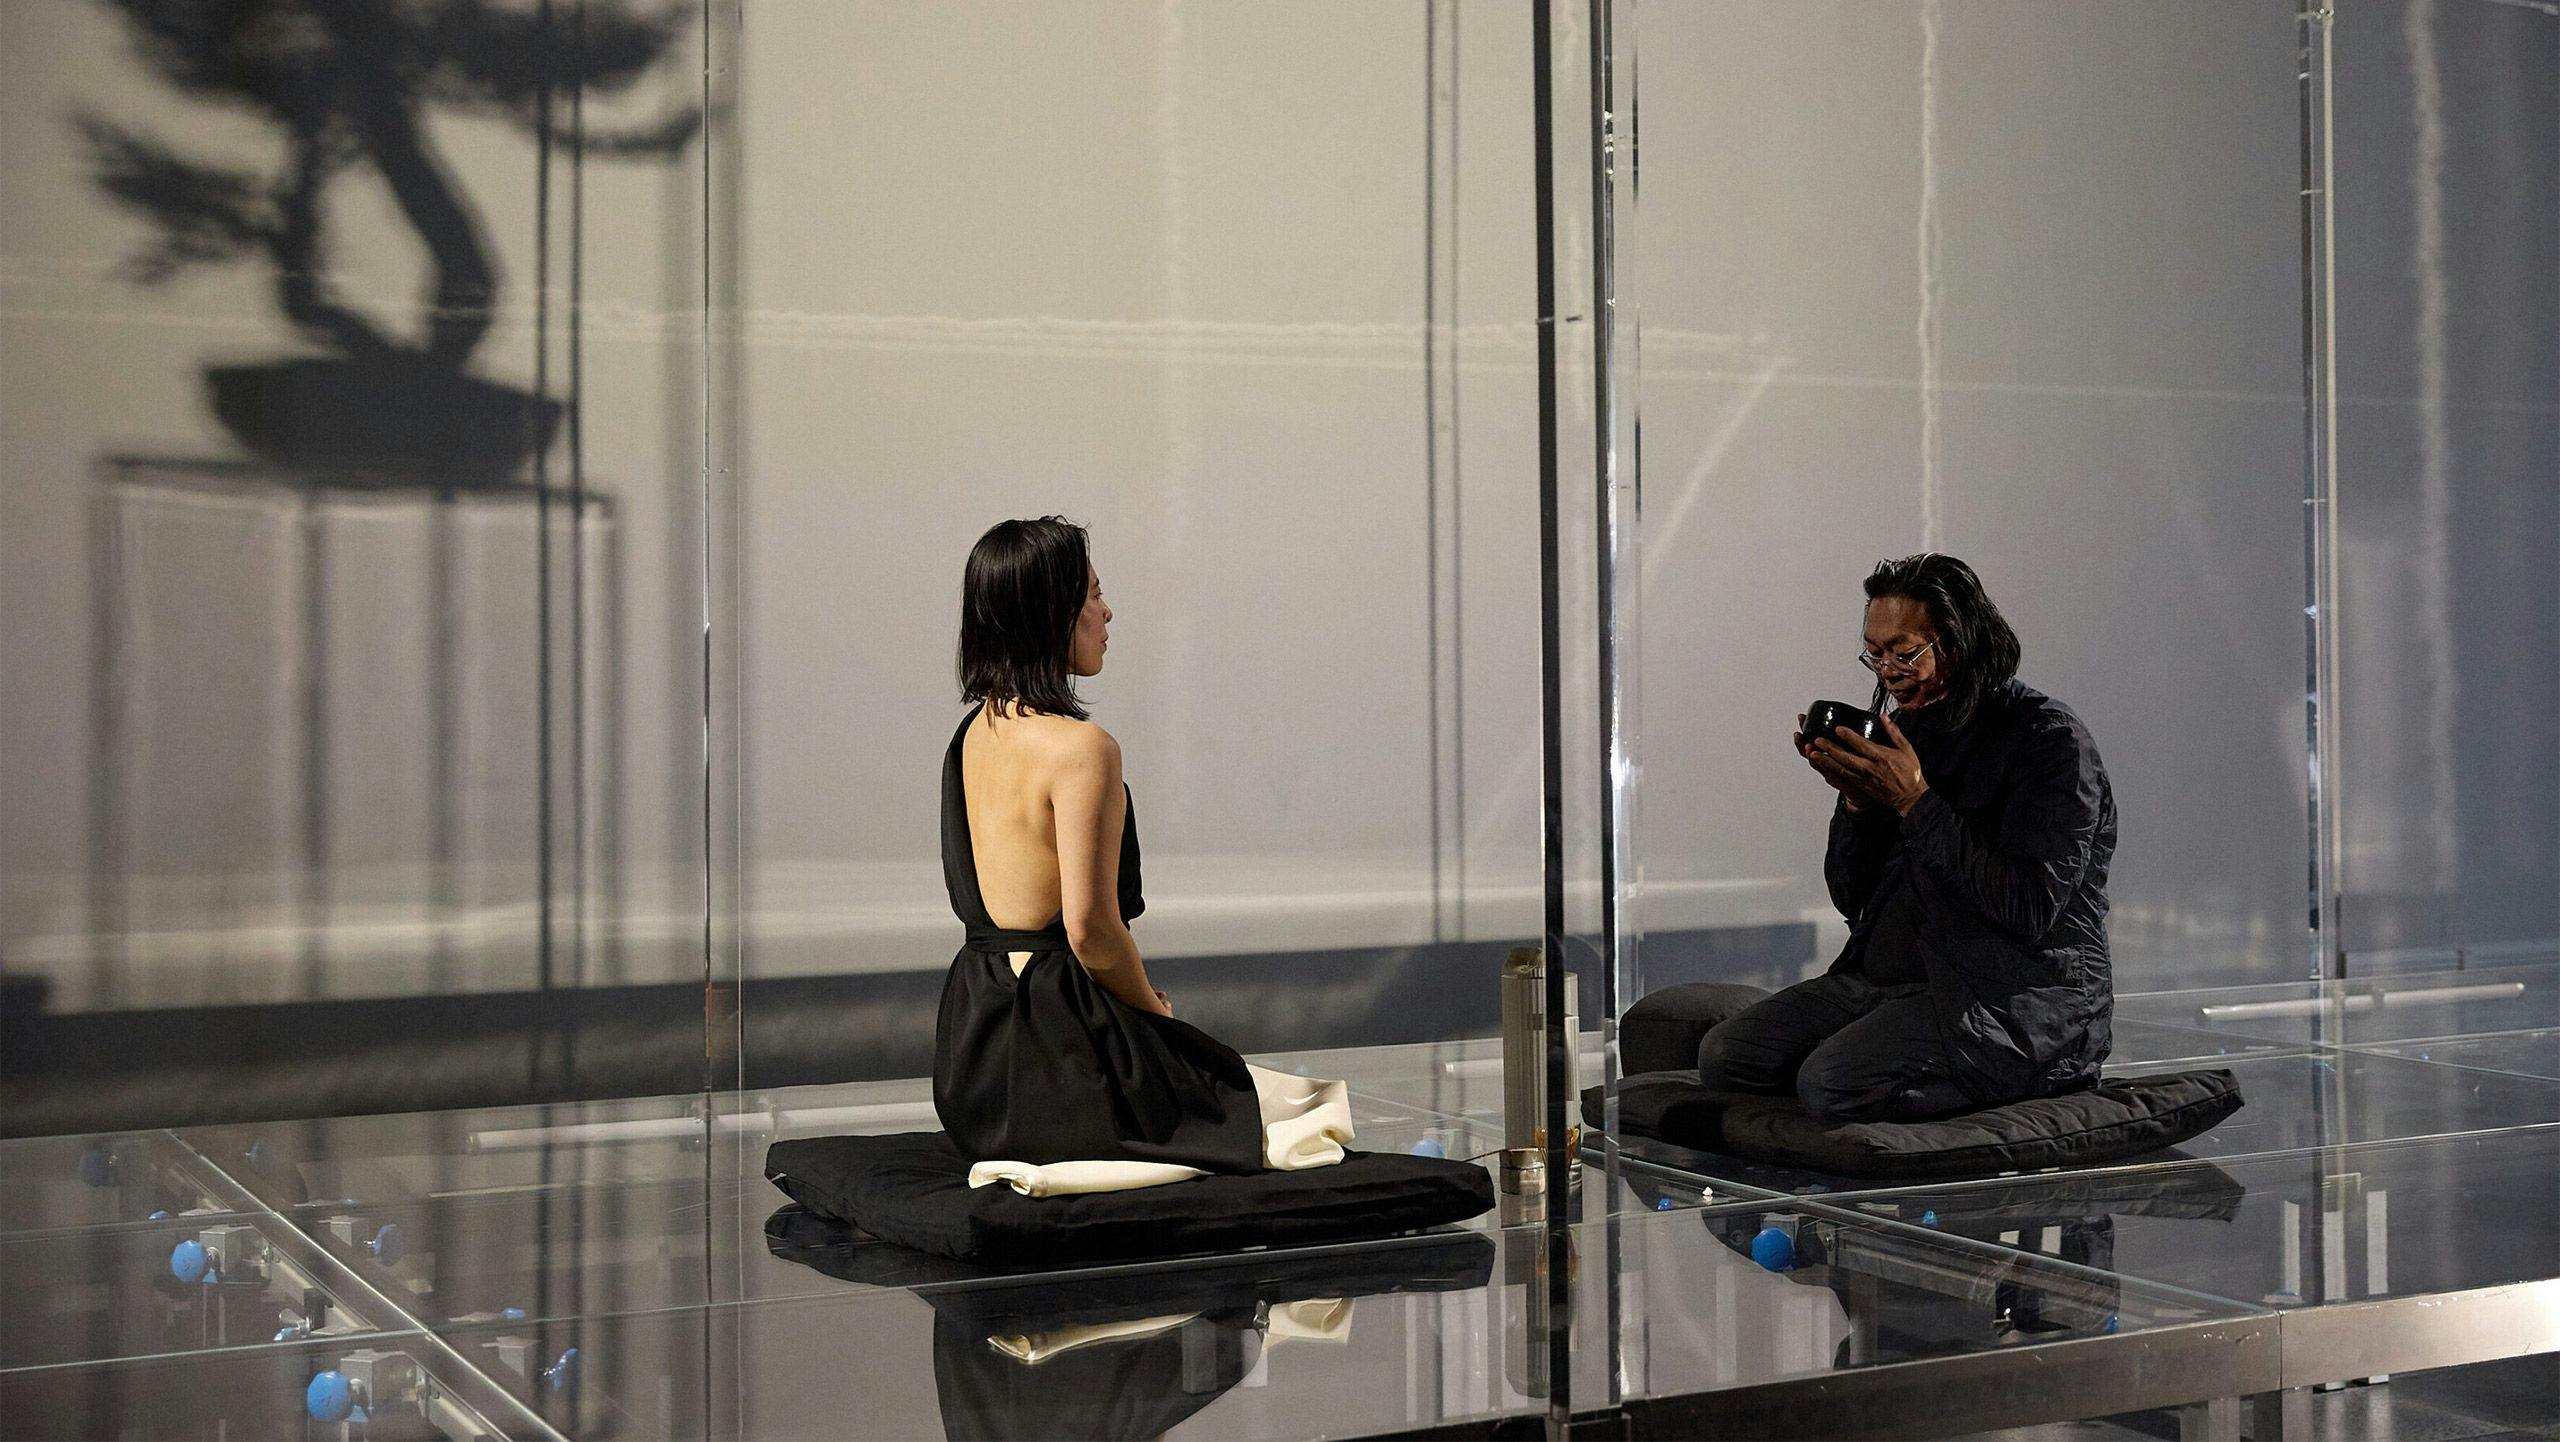 Installation view of the exhibition, Tea Ceremony with Mai Ueda and Rirkrit Tiravanija, by Judith Buss.